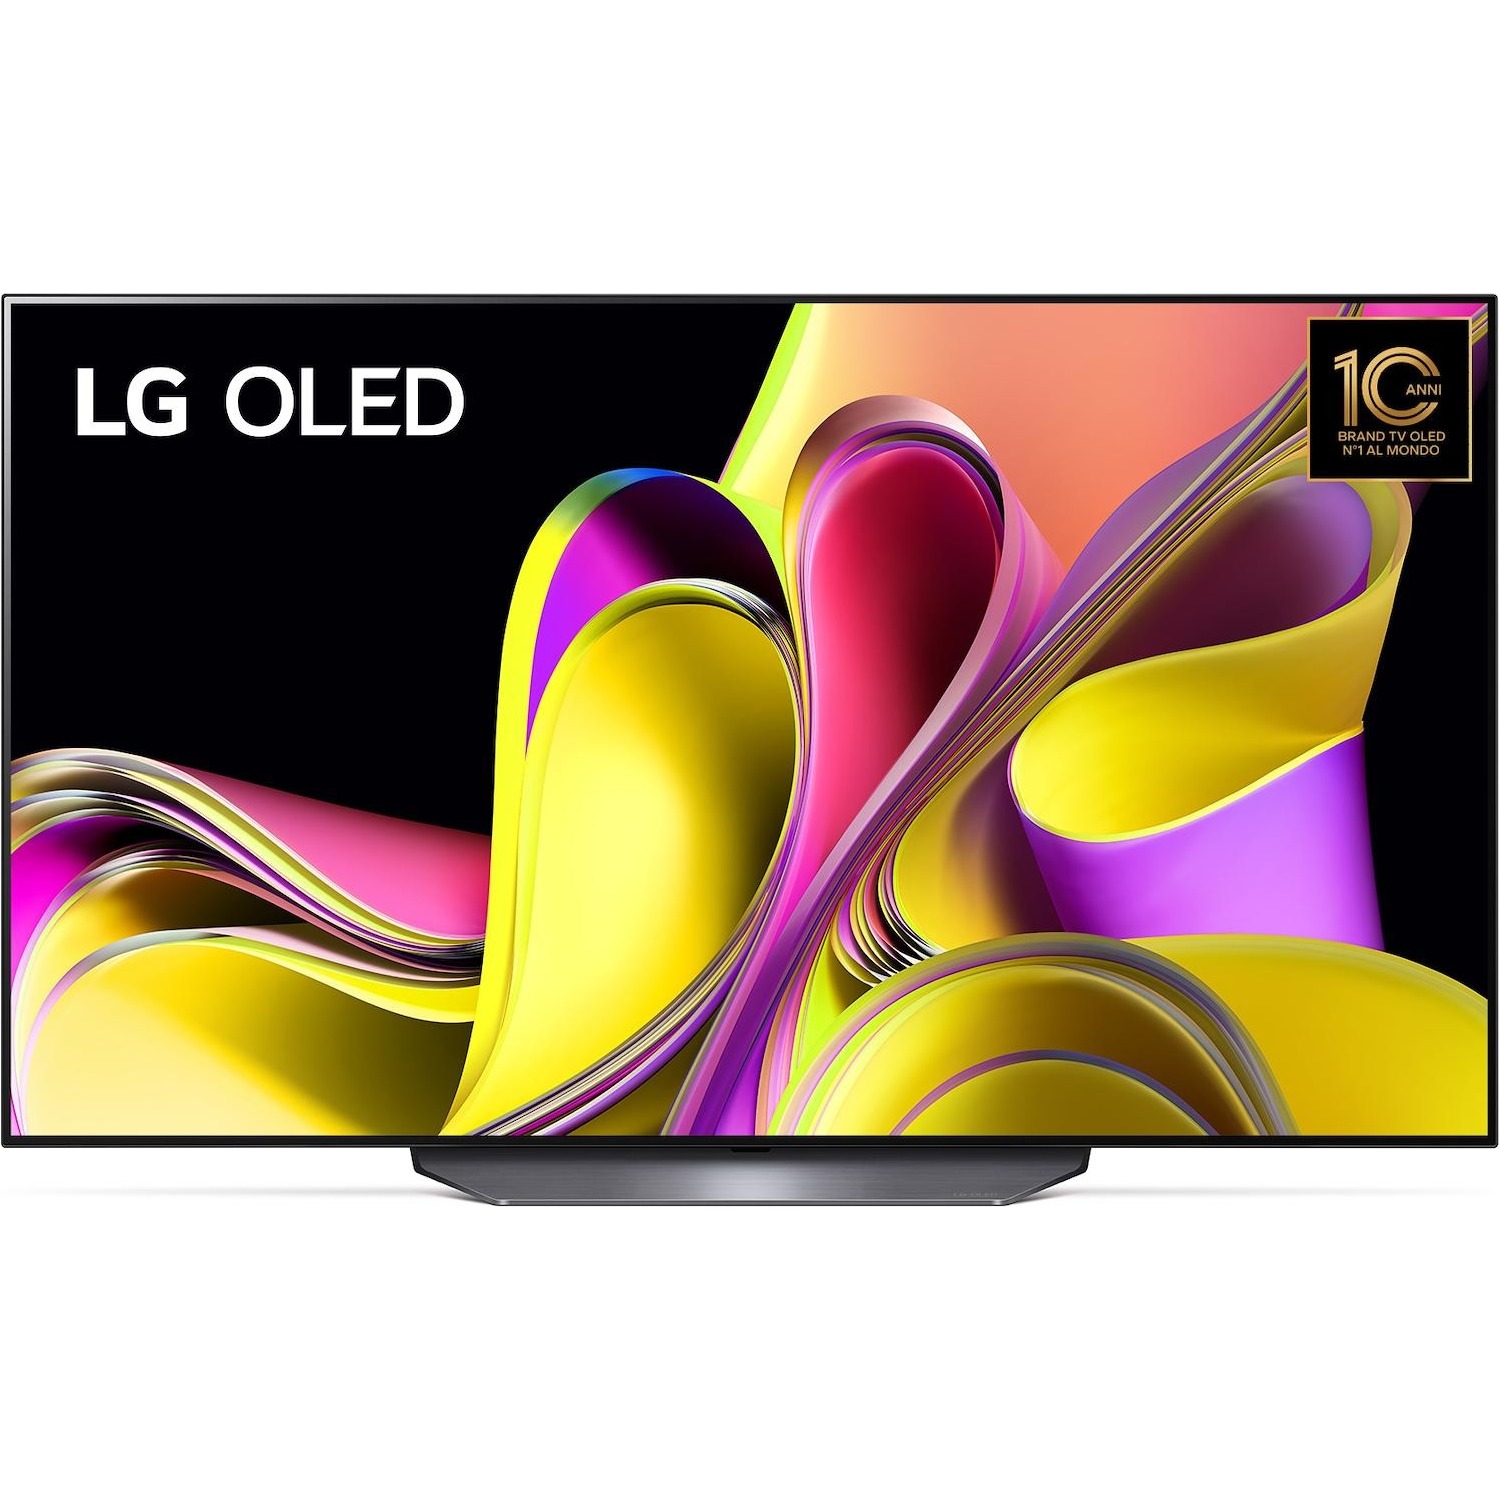 Immagine per TV OLED UHD 4K Smart LG OLED55B36 blu da DIMOStore